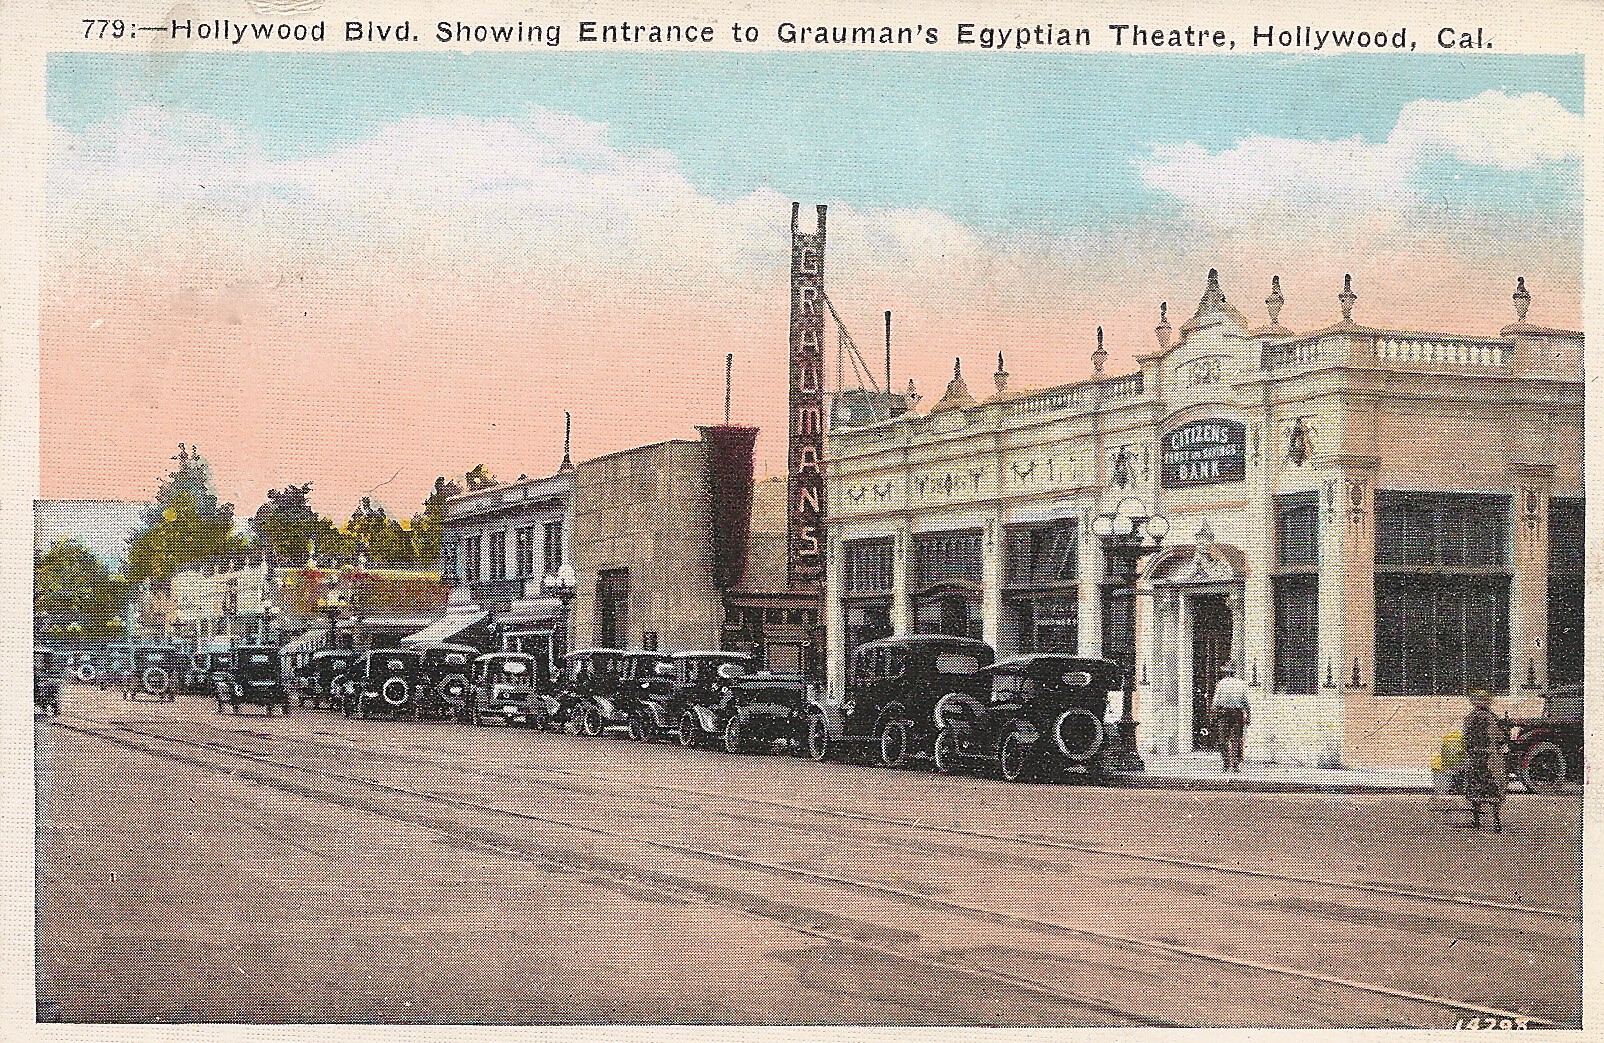  Grauman’s Egyptian Theatre